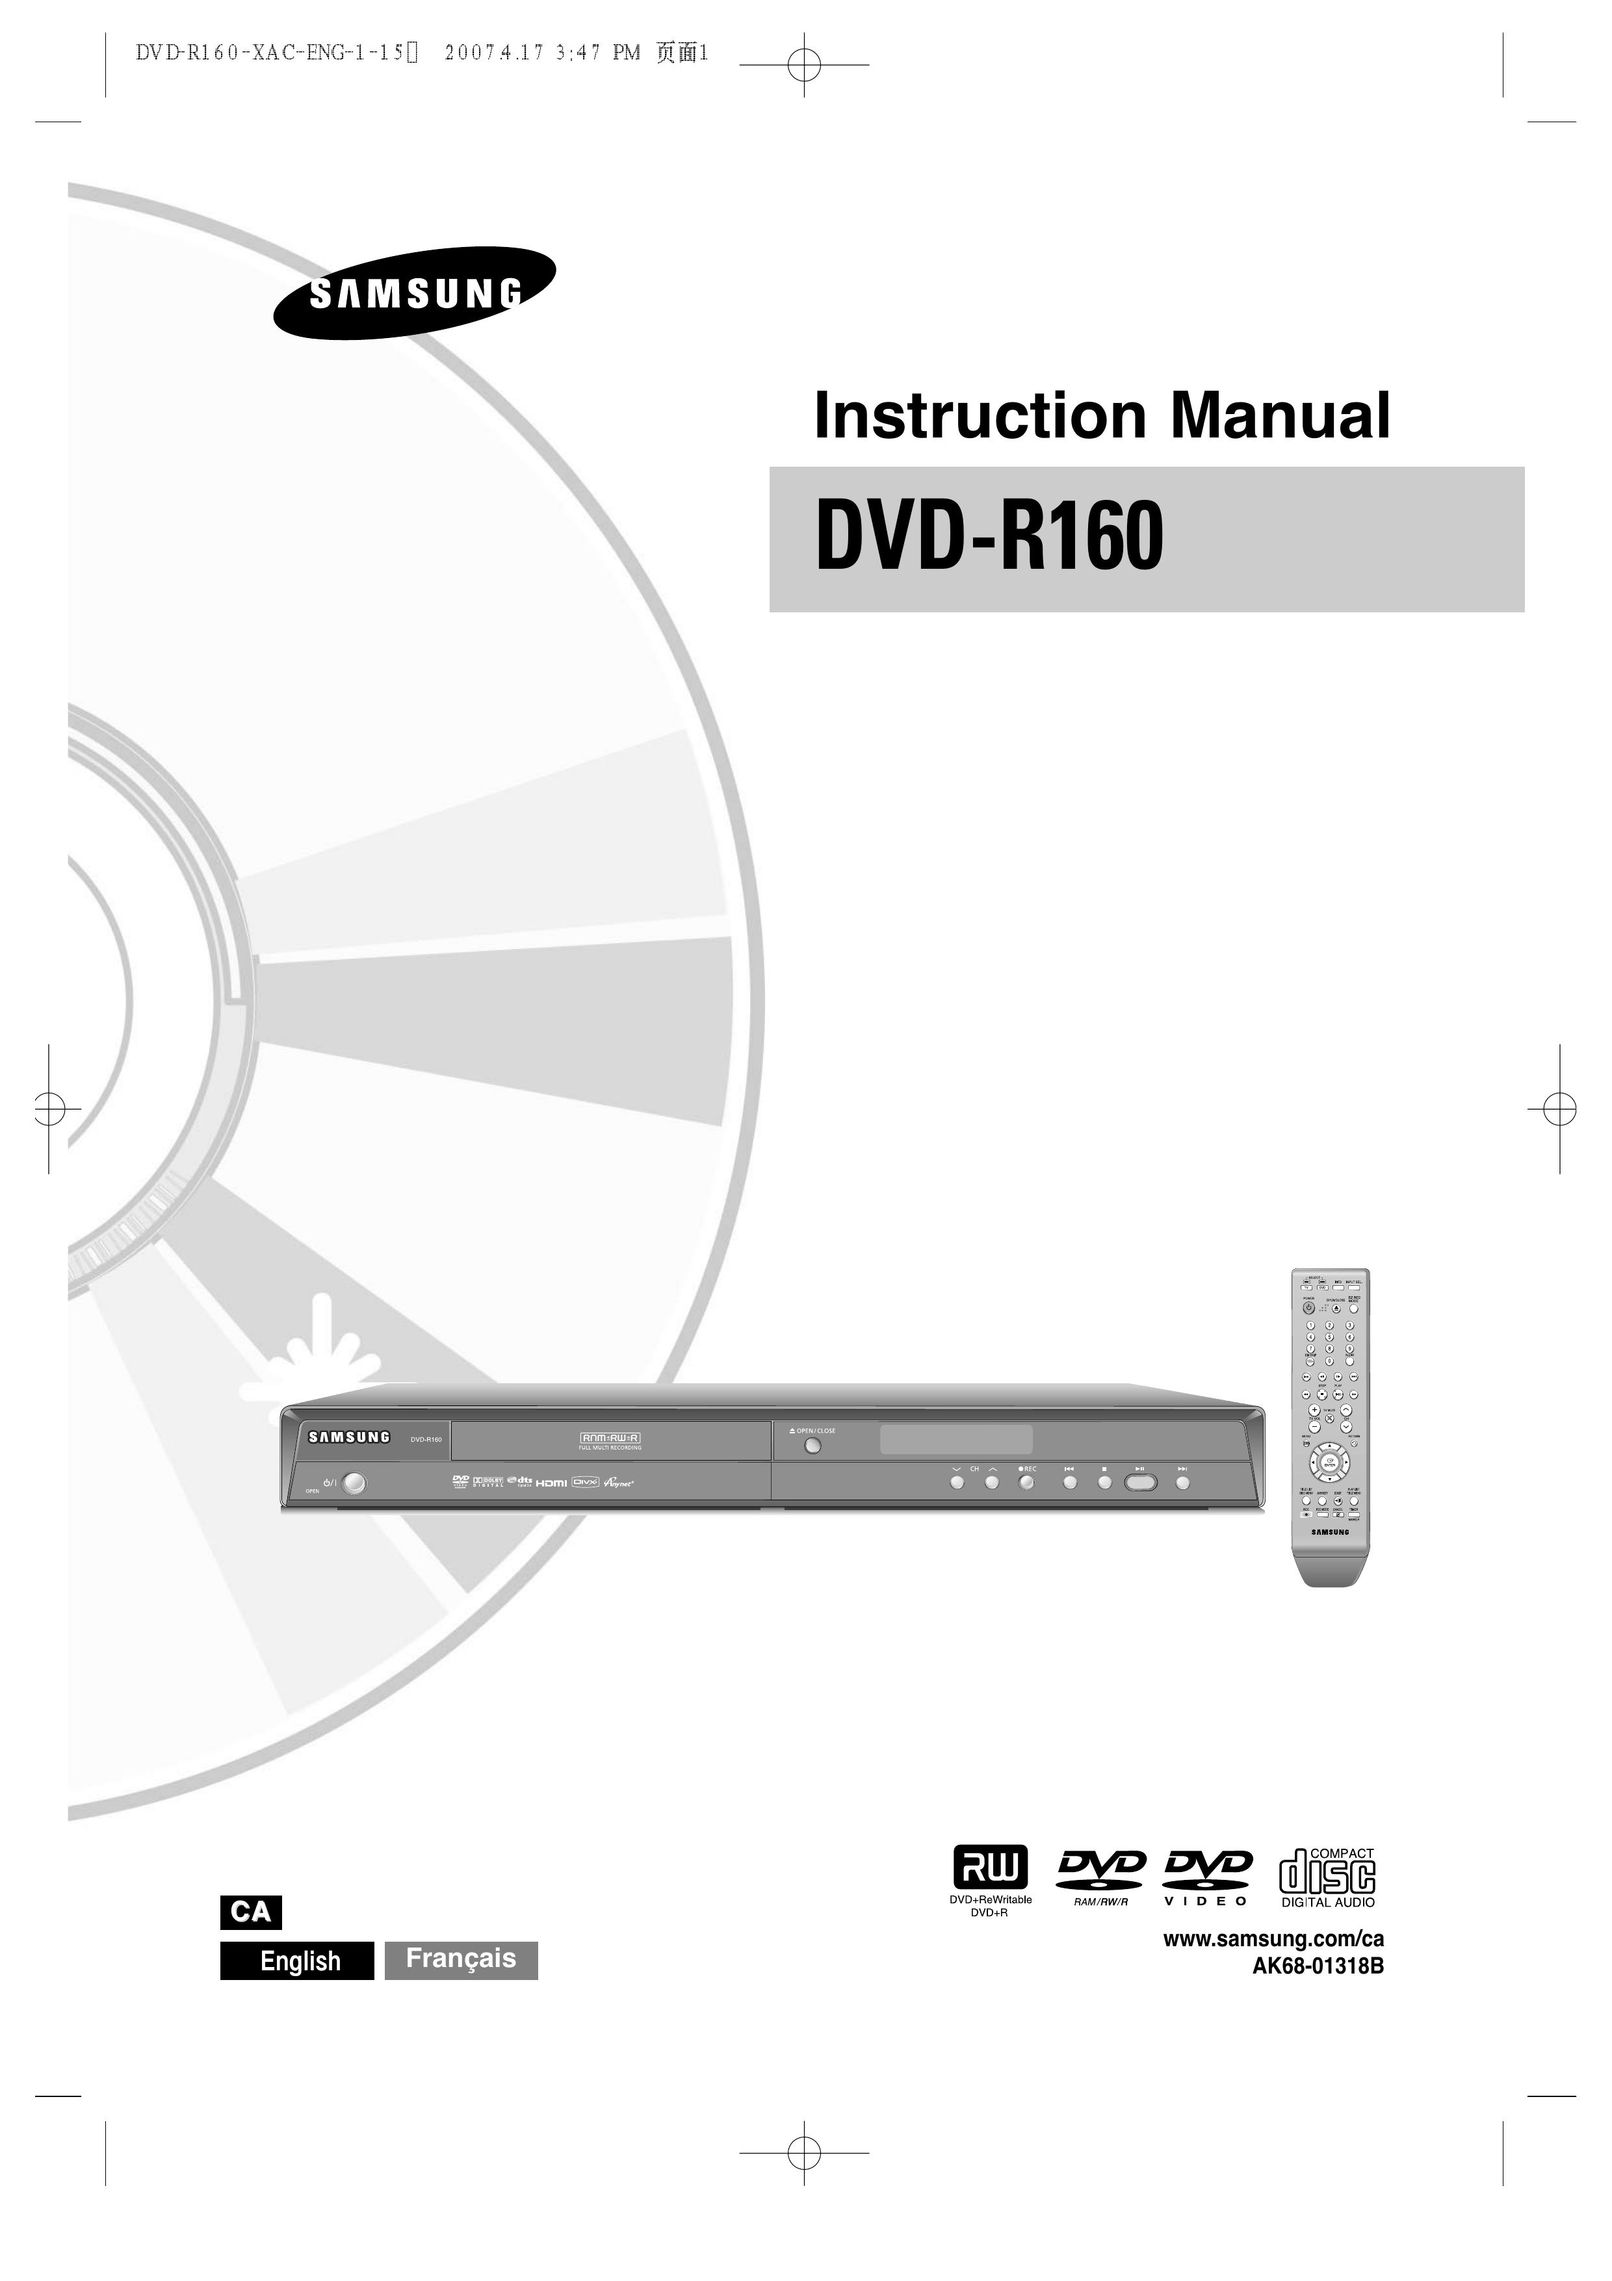 Samsung DVD-R160-XAC DVD Recorder User Manual